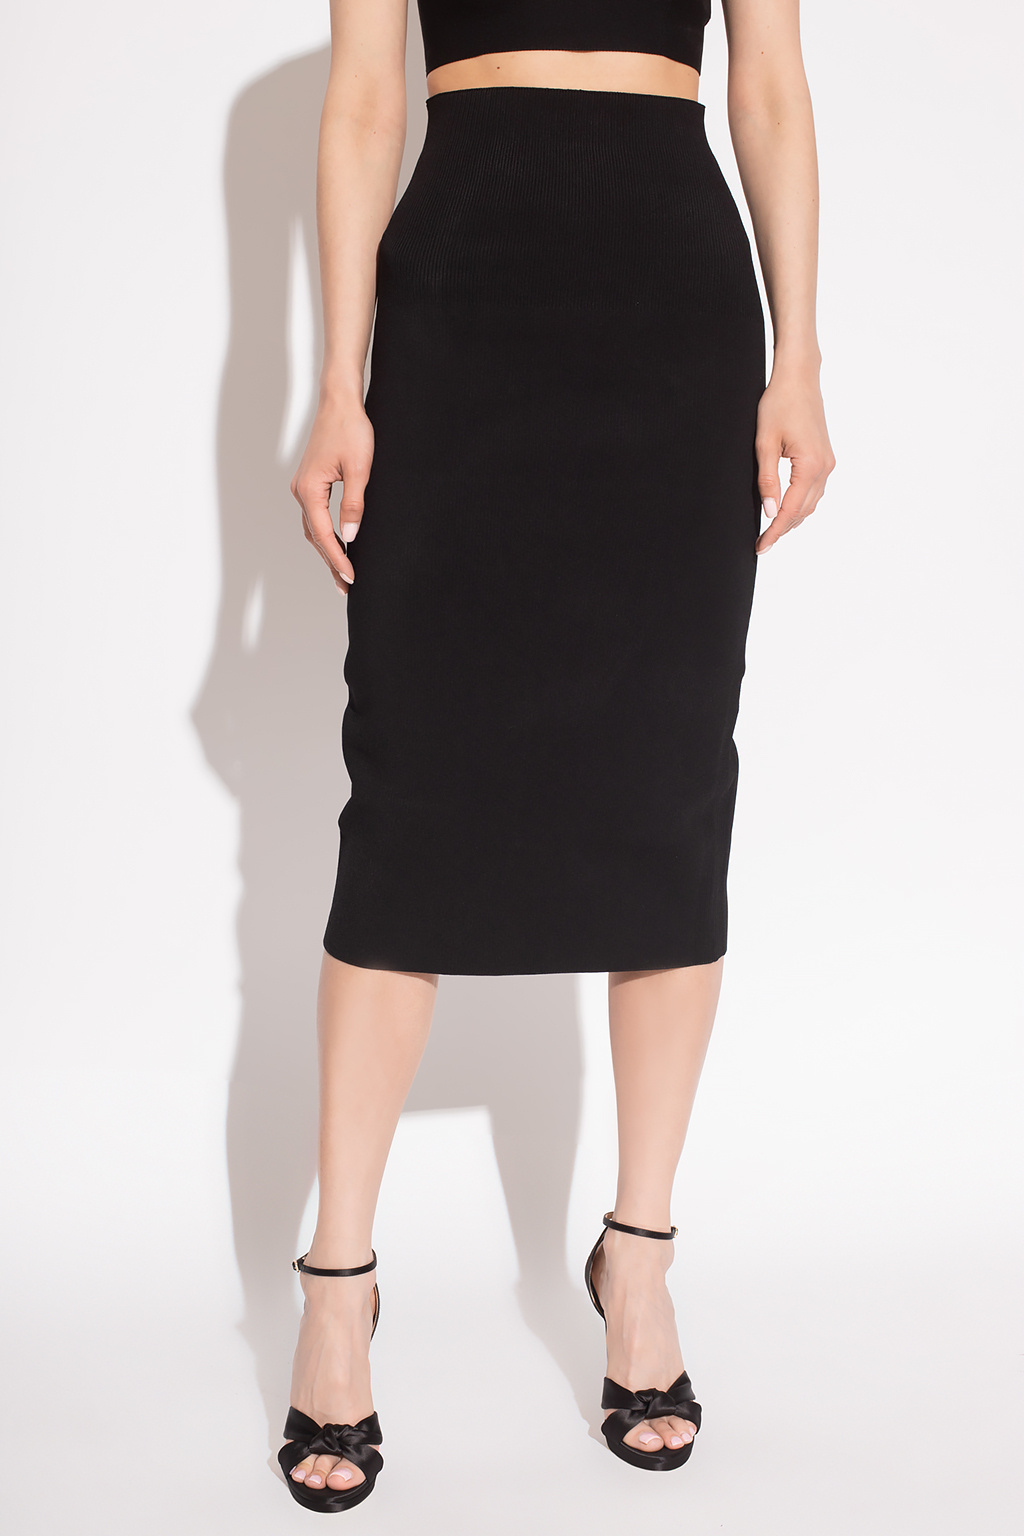 Victoria Beckham The ‘VB Body’ collection skirt | Women's Clothing | Vitkac